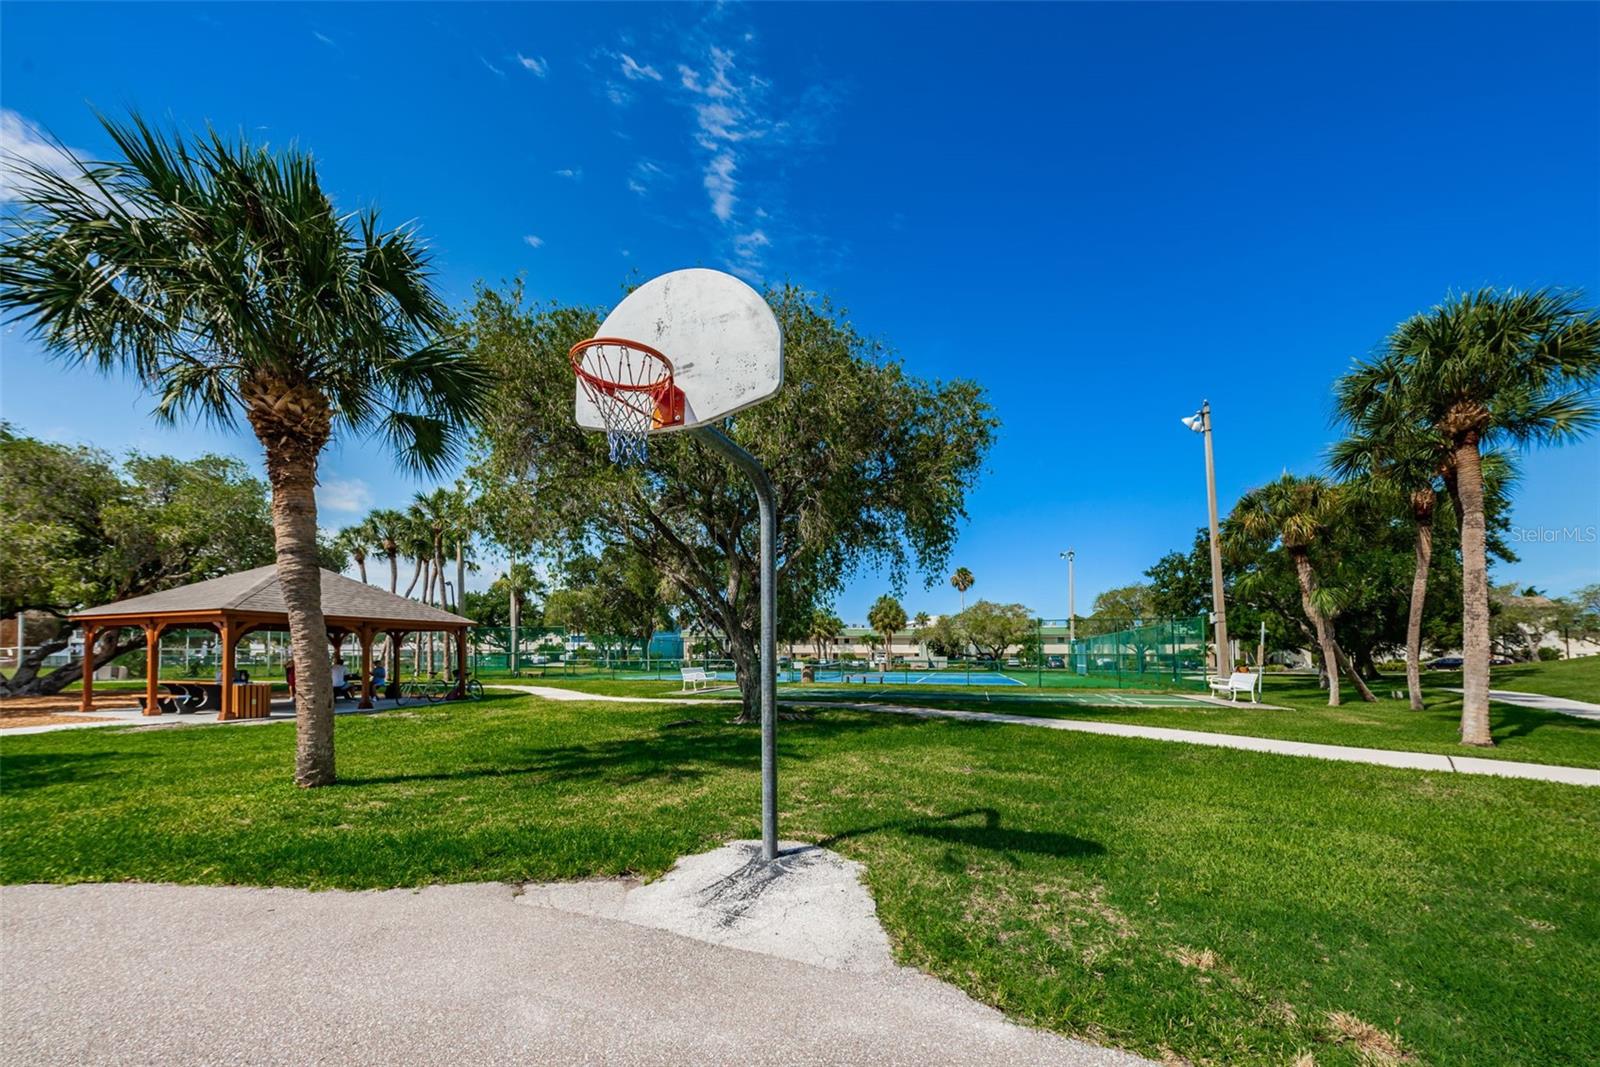 Basketball practice area